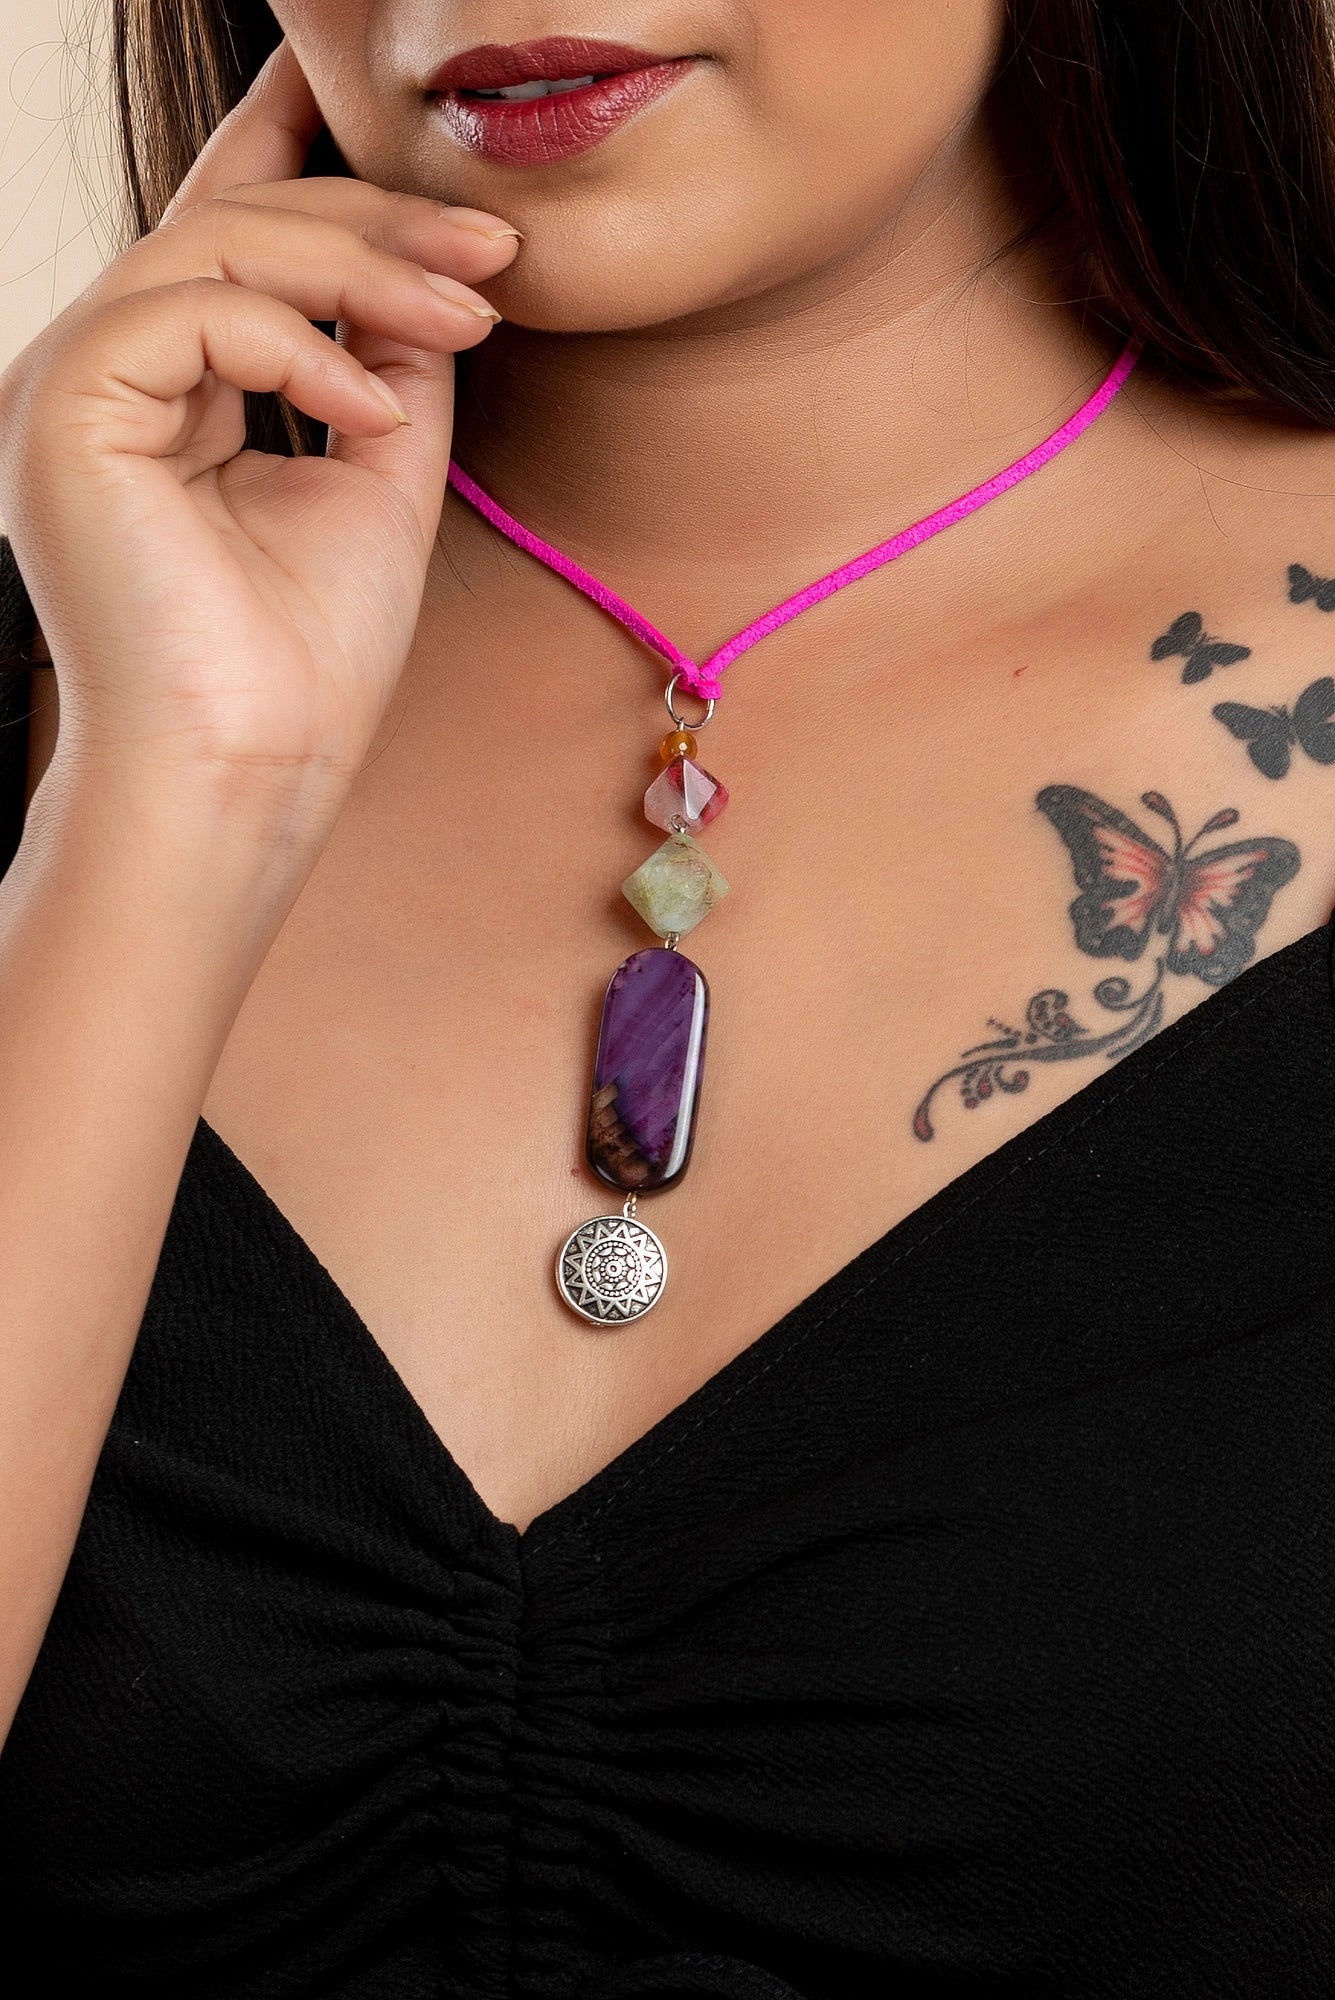 designer-semi-precious-stones-agate-onyx-sleek-neckpiece-strung-with-pink-adjustable-suede-cord